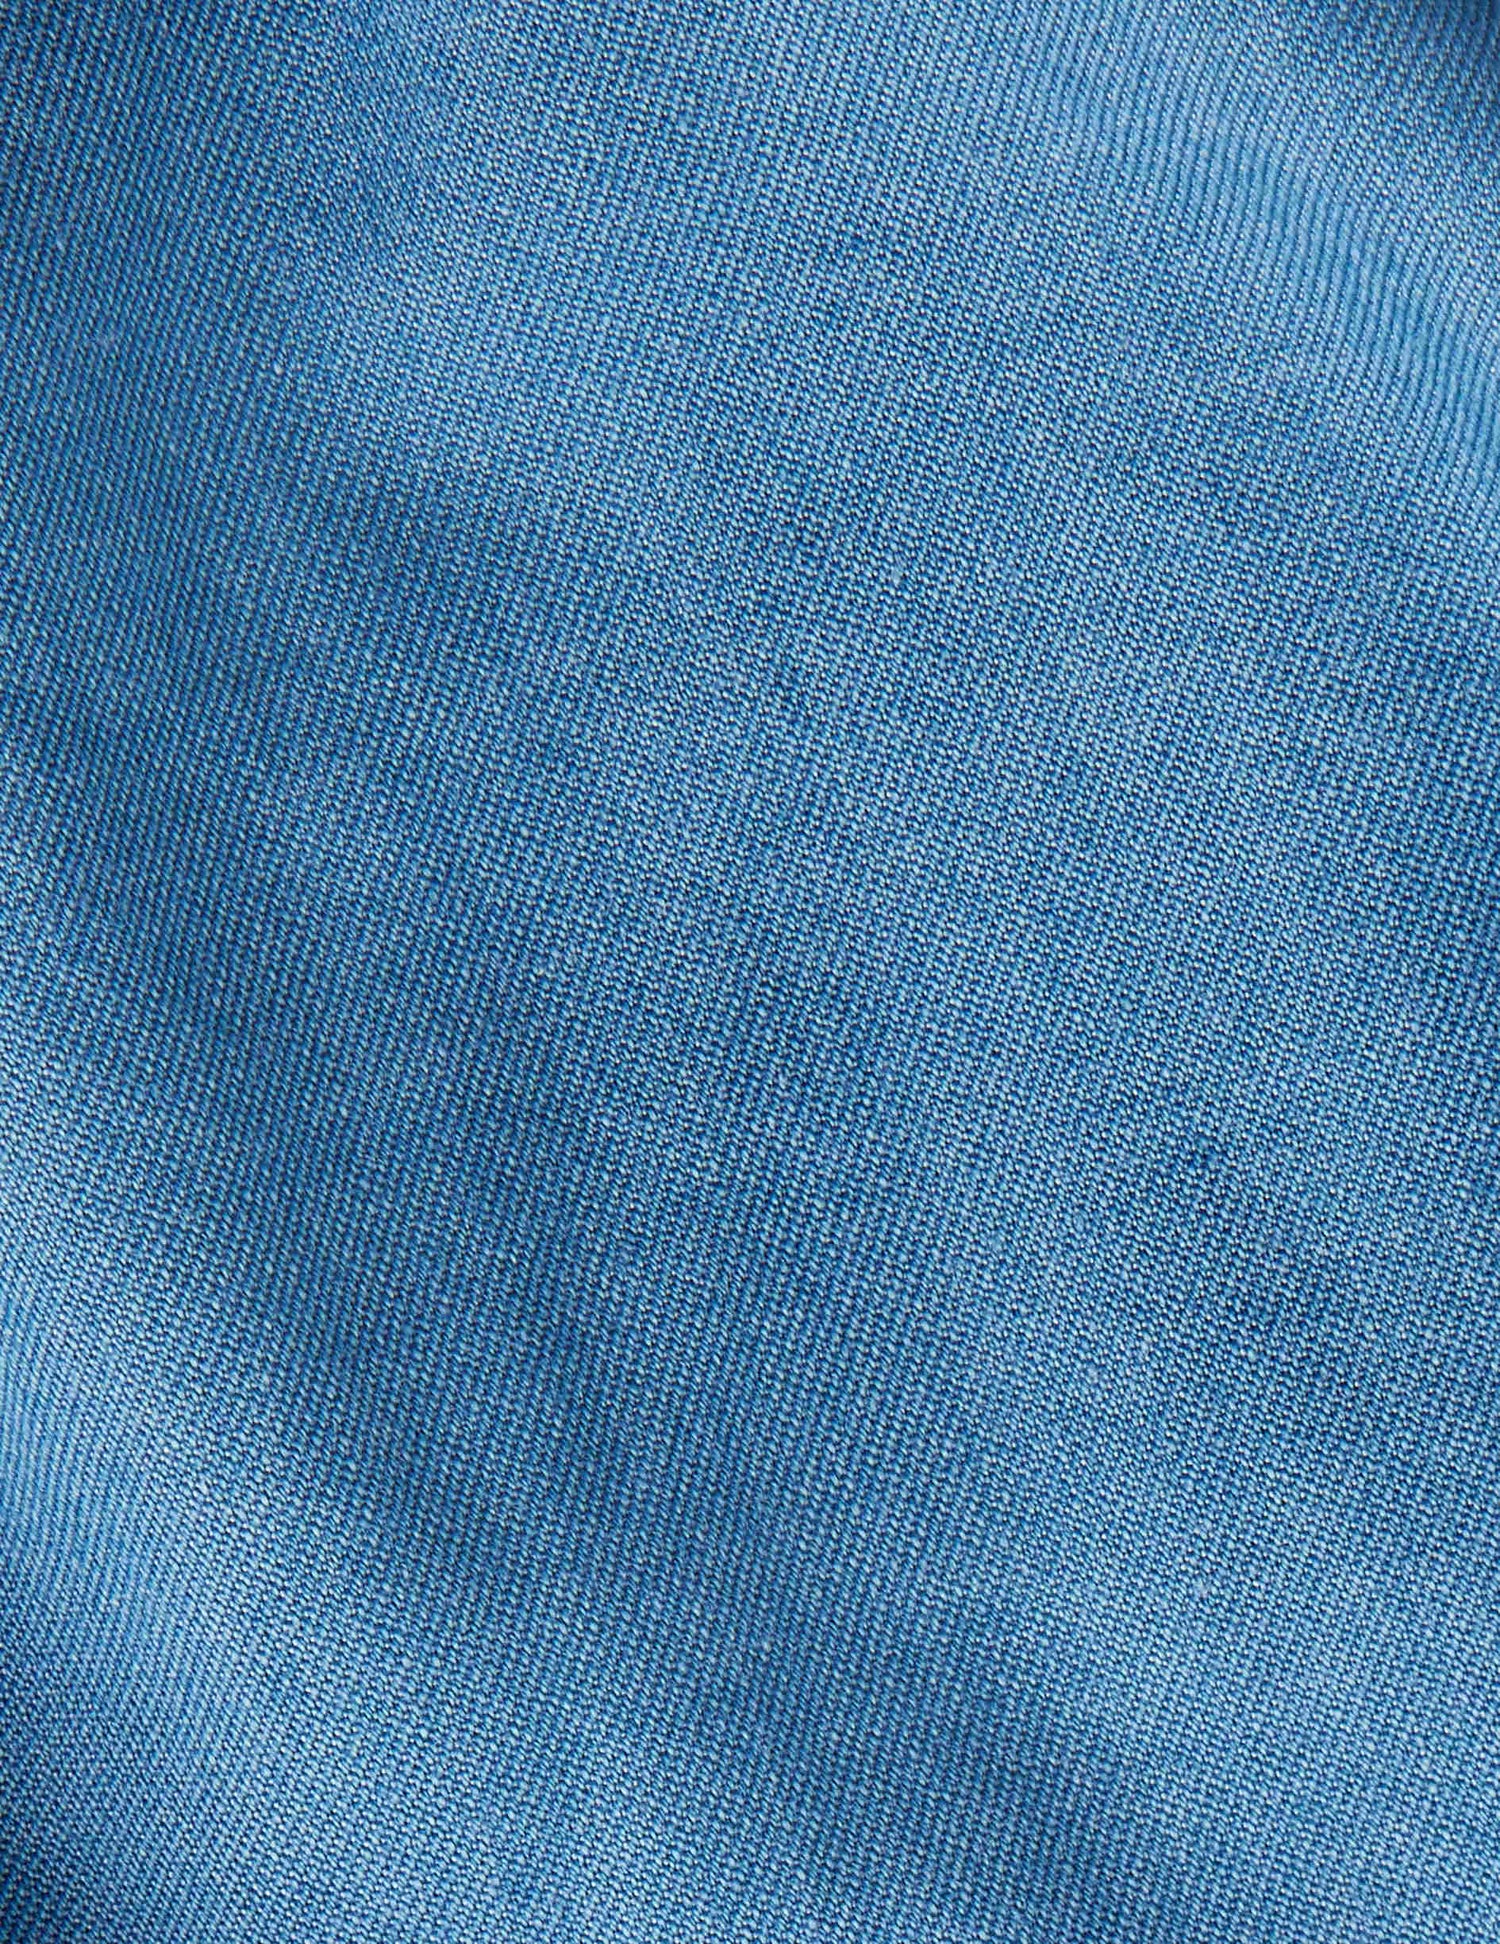 Light blue denim Carl shirt - Denim - Open straight Collar#5